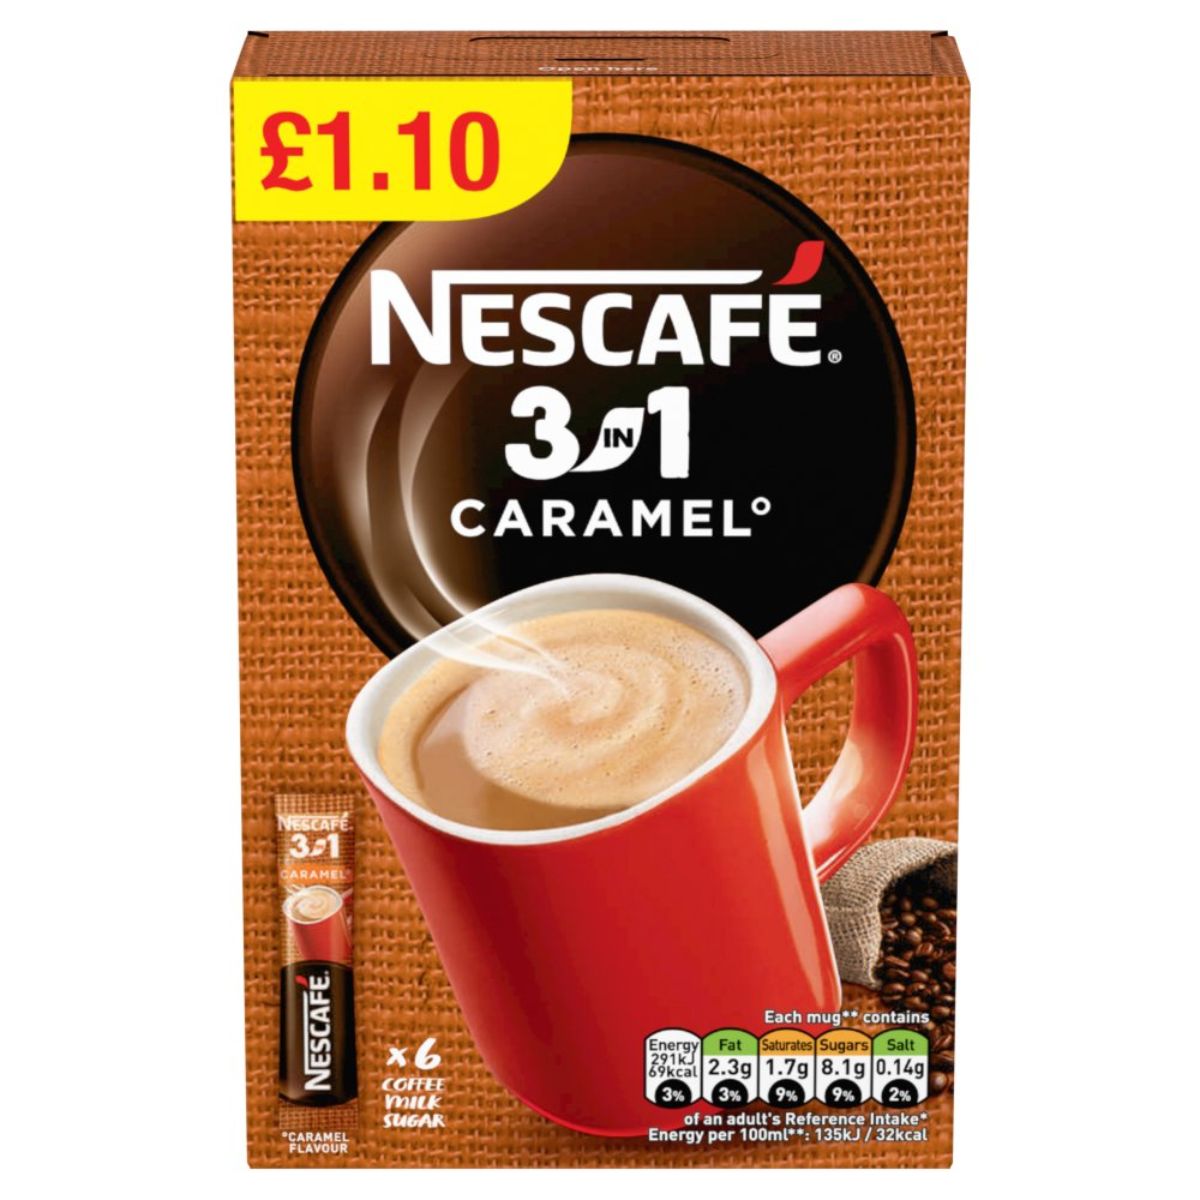 Nescafe 3 in 1 Caramel - 6 Sachets coffee.